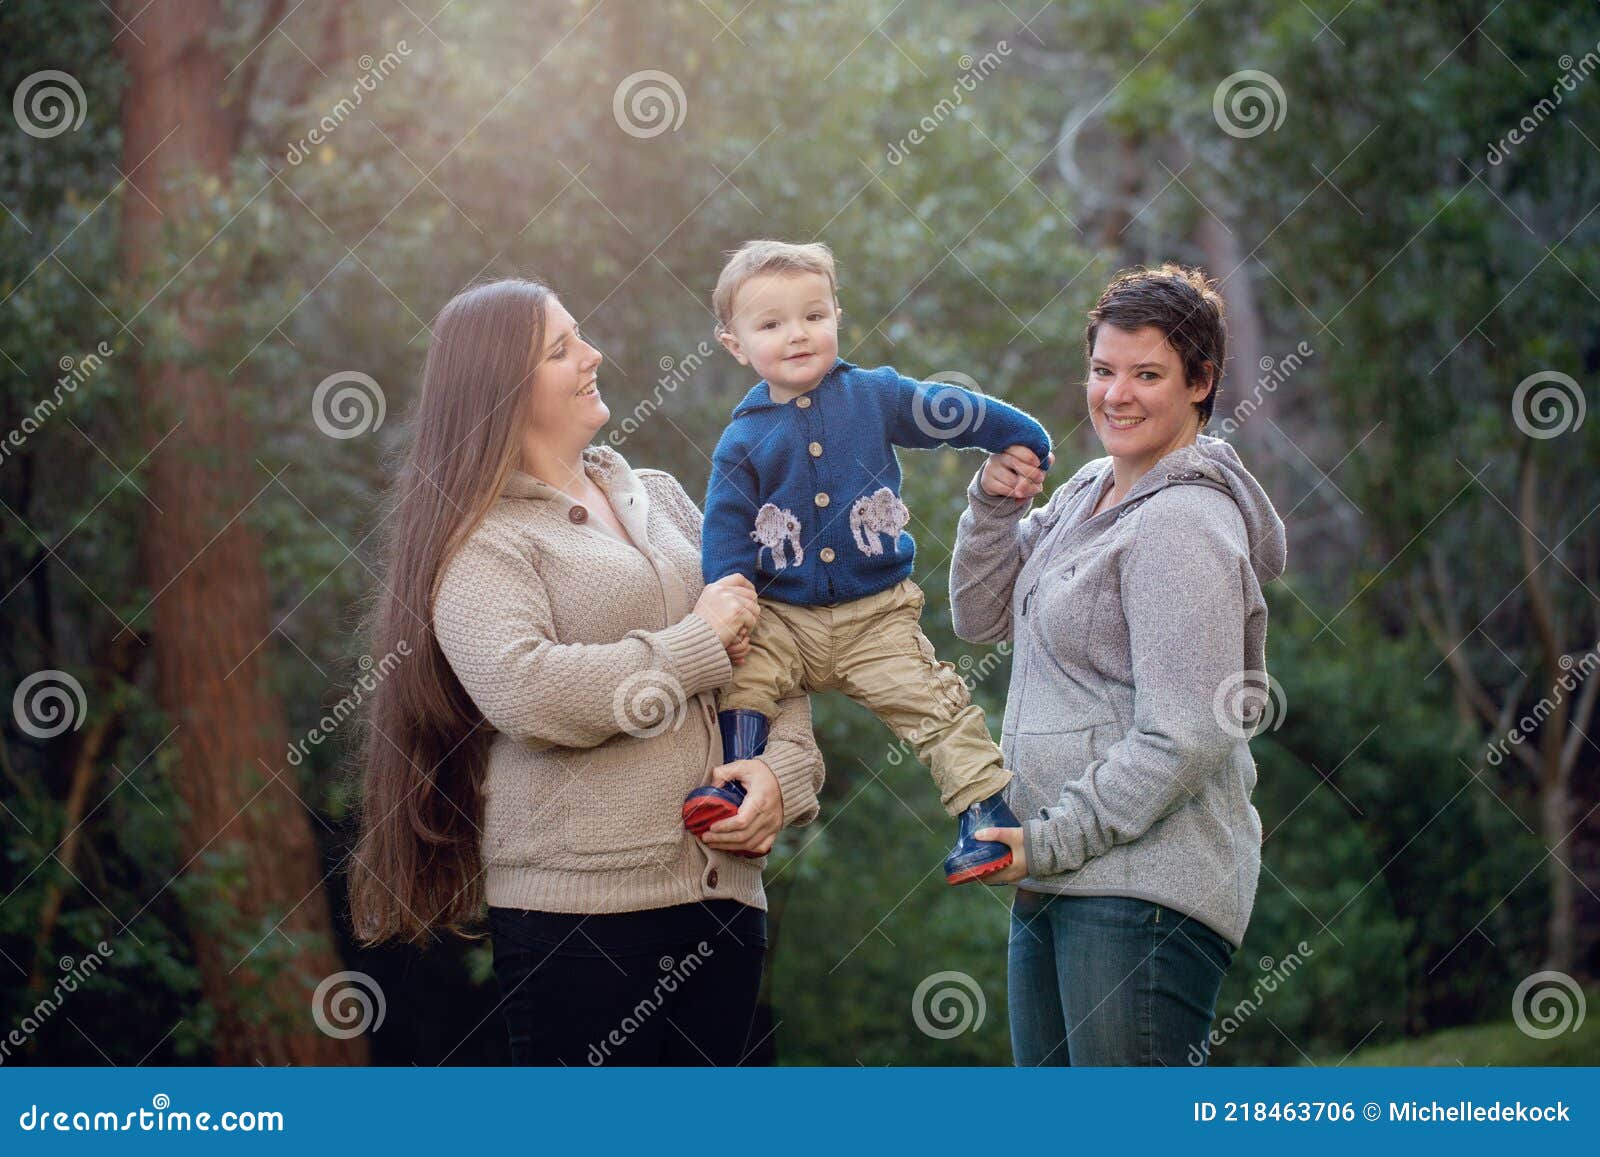 A Lesbian Couple Holding a Child photo